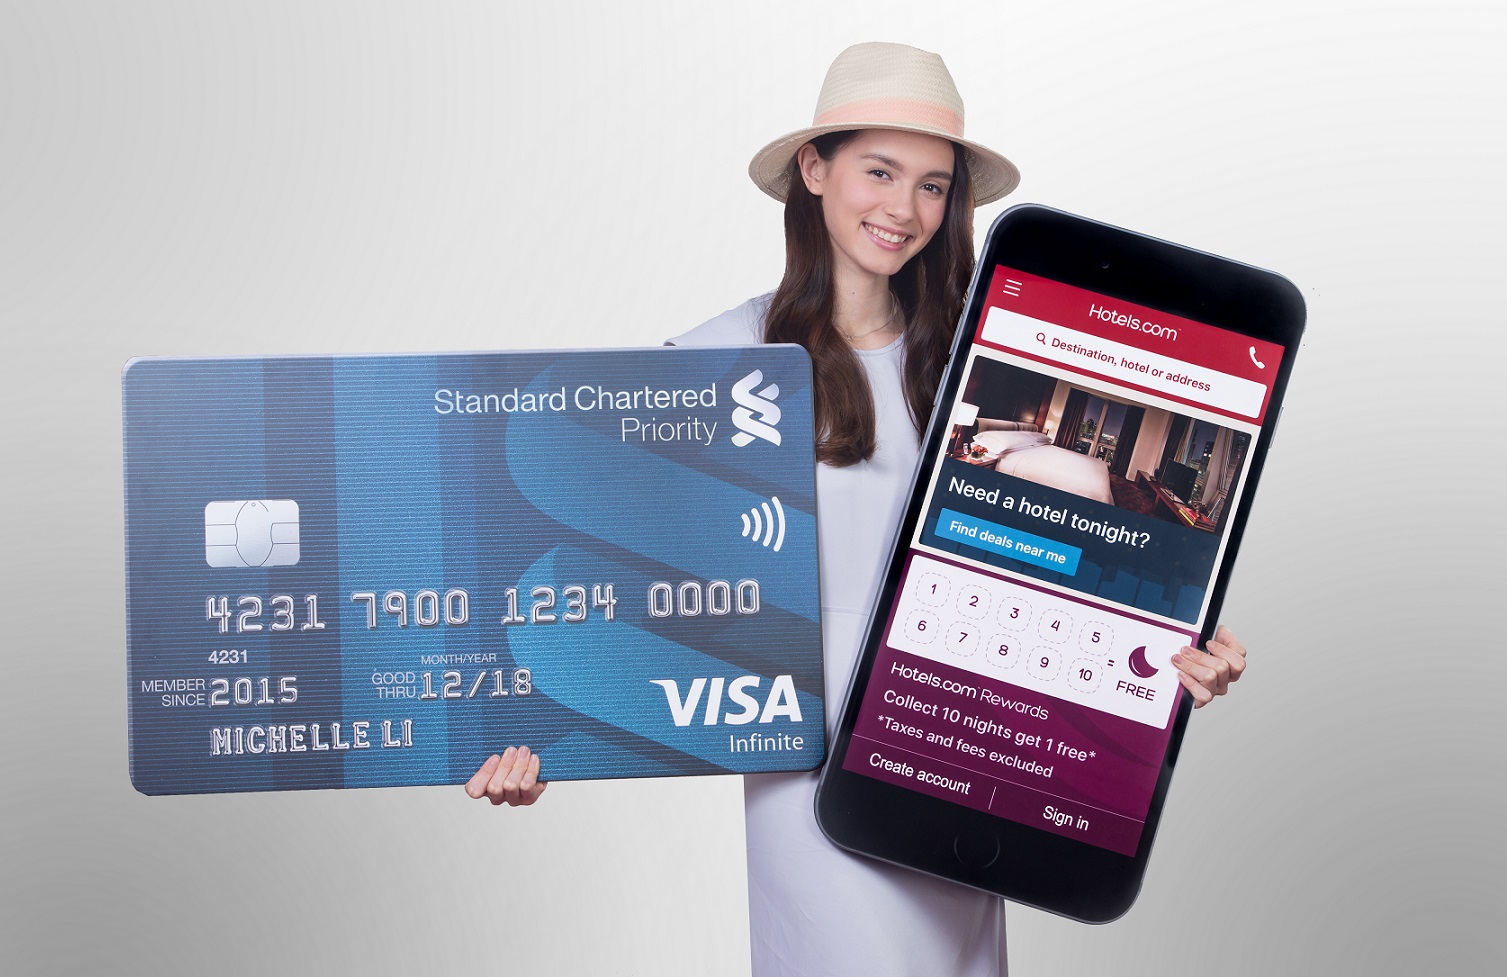 Standard Chartered, Hotels.com announce three-year partnership